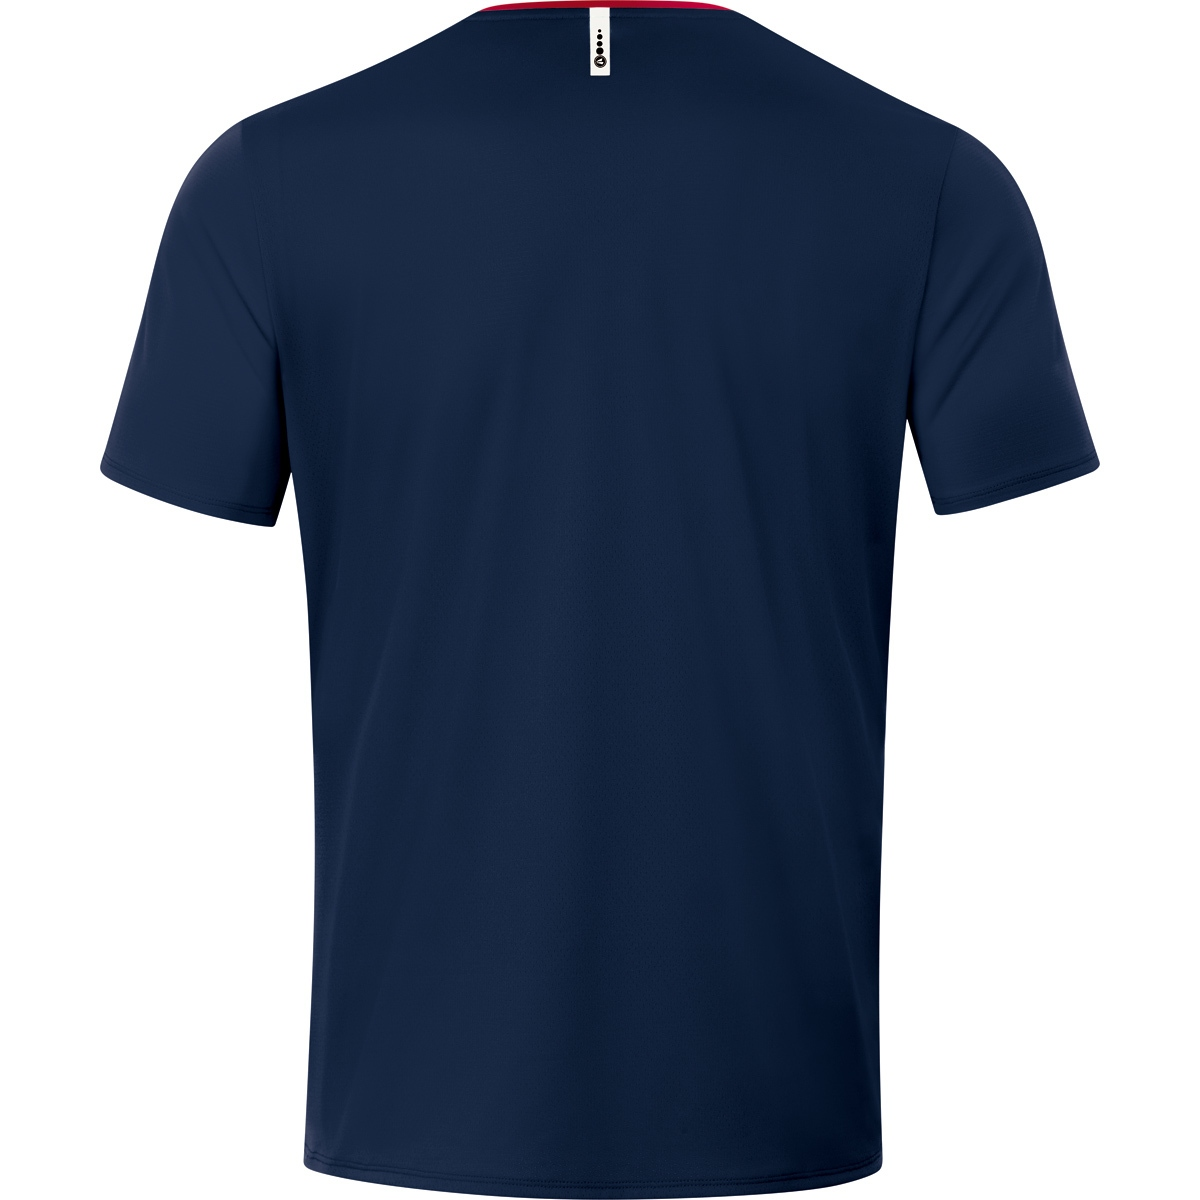 Herren, M, JAKO marine/chili T-Shirt 2.0 Gr. Champ rot, 6120